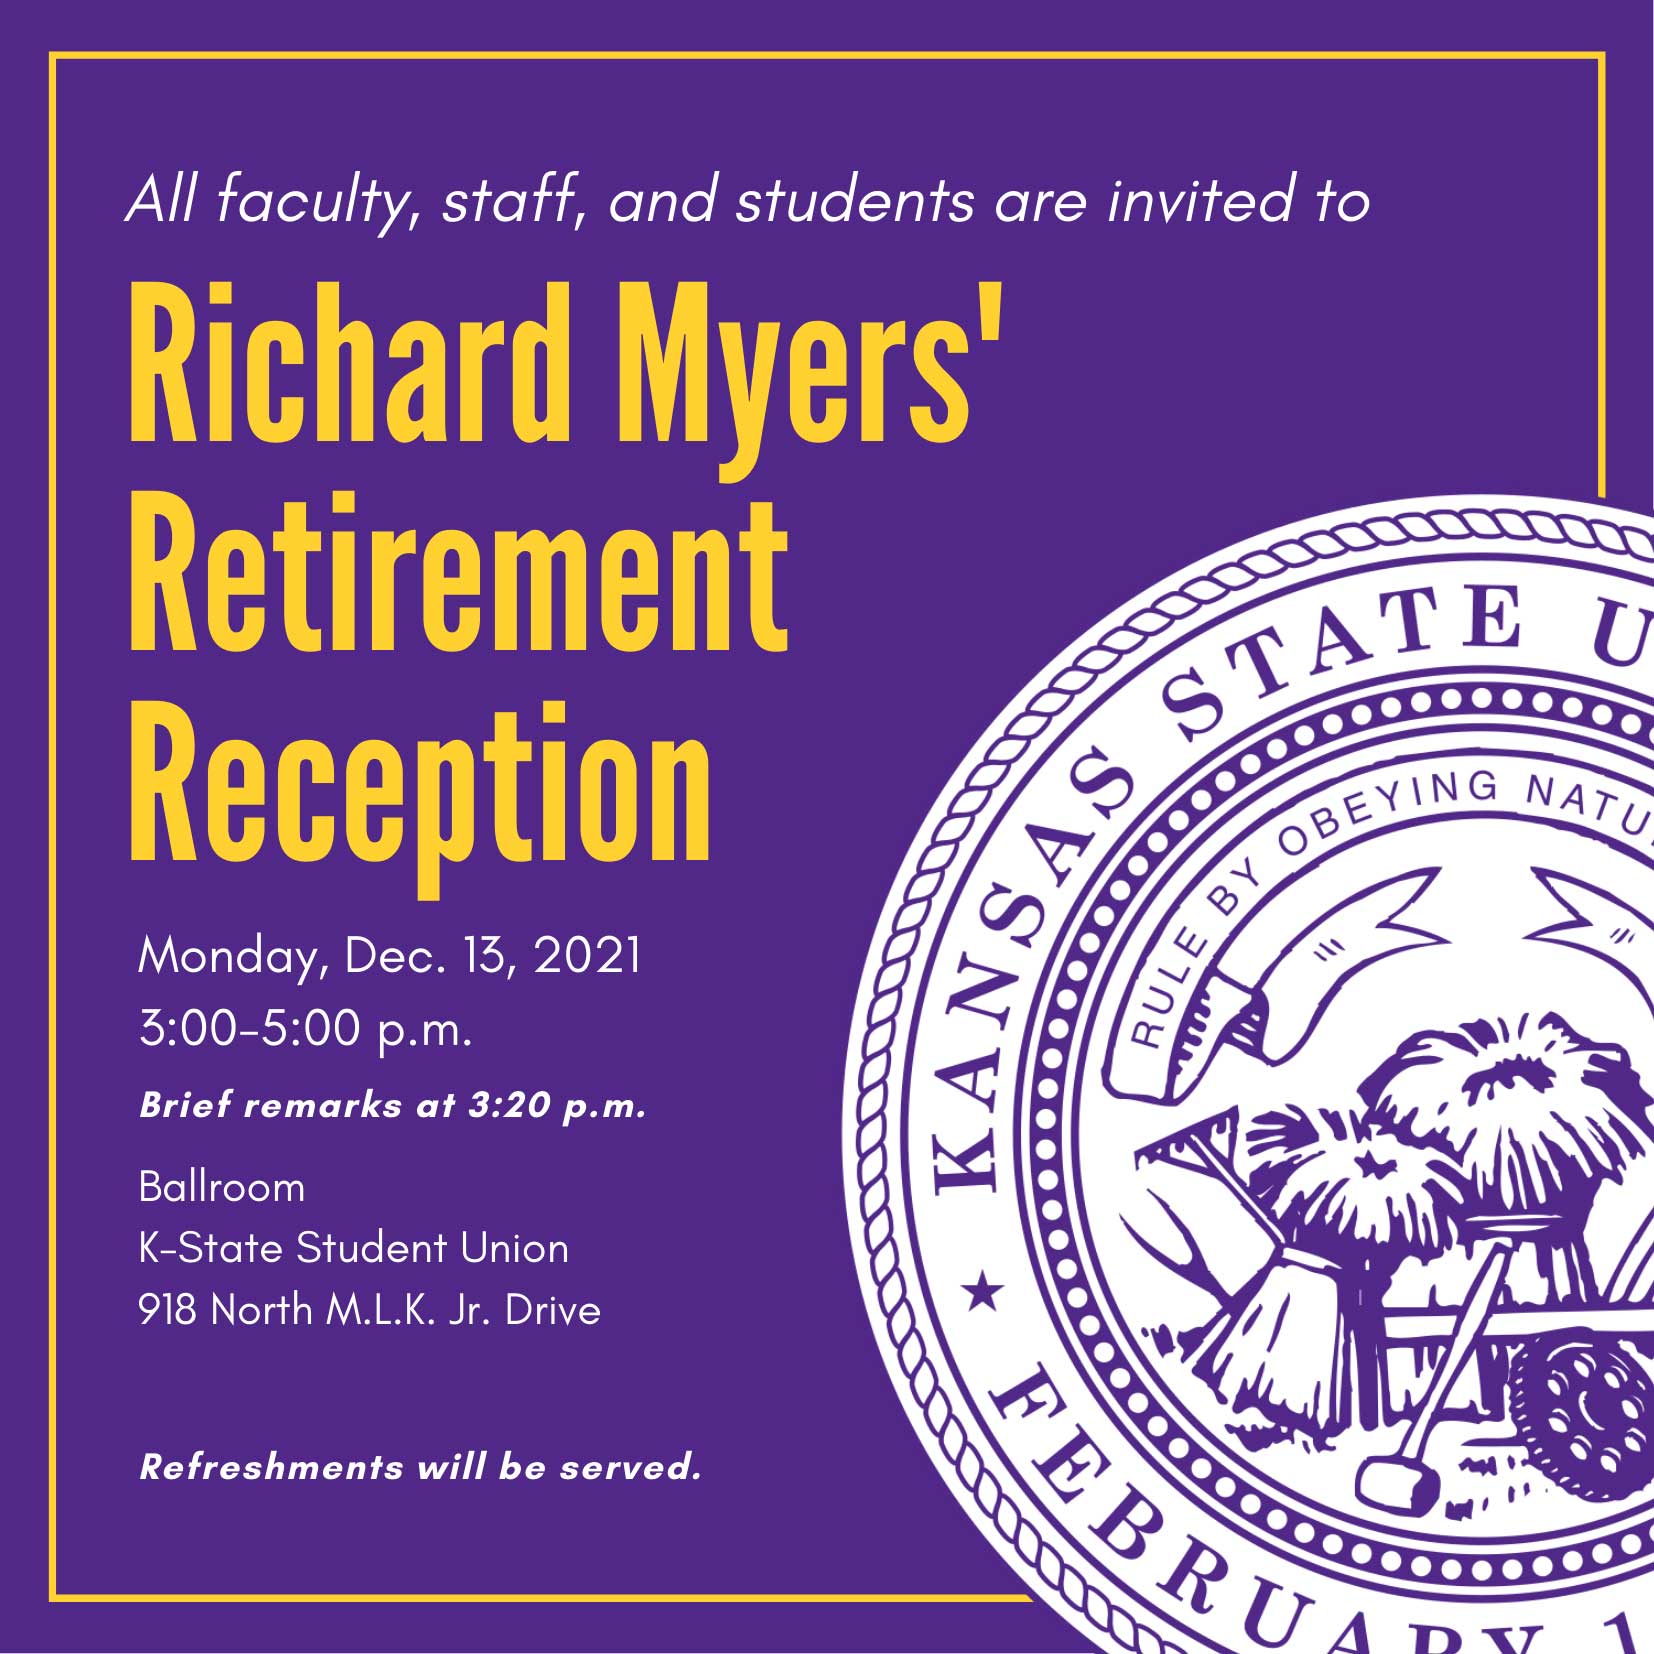 President Richard Myers retirement reception invitation